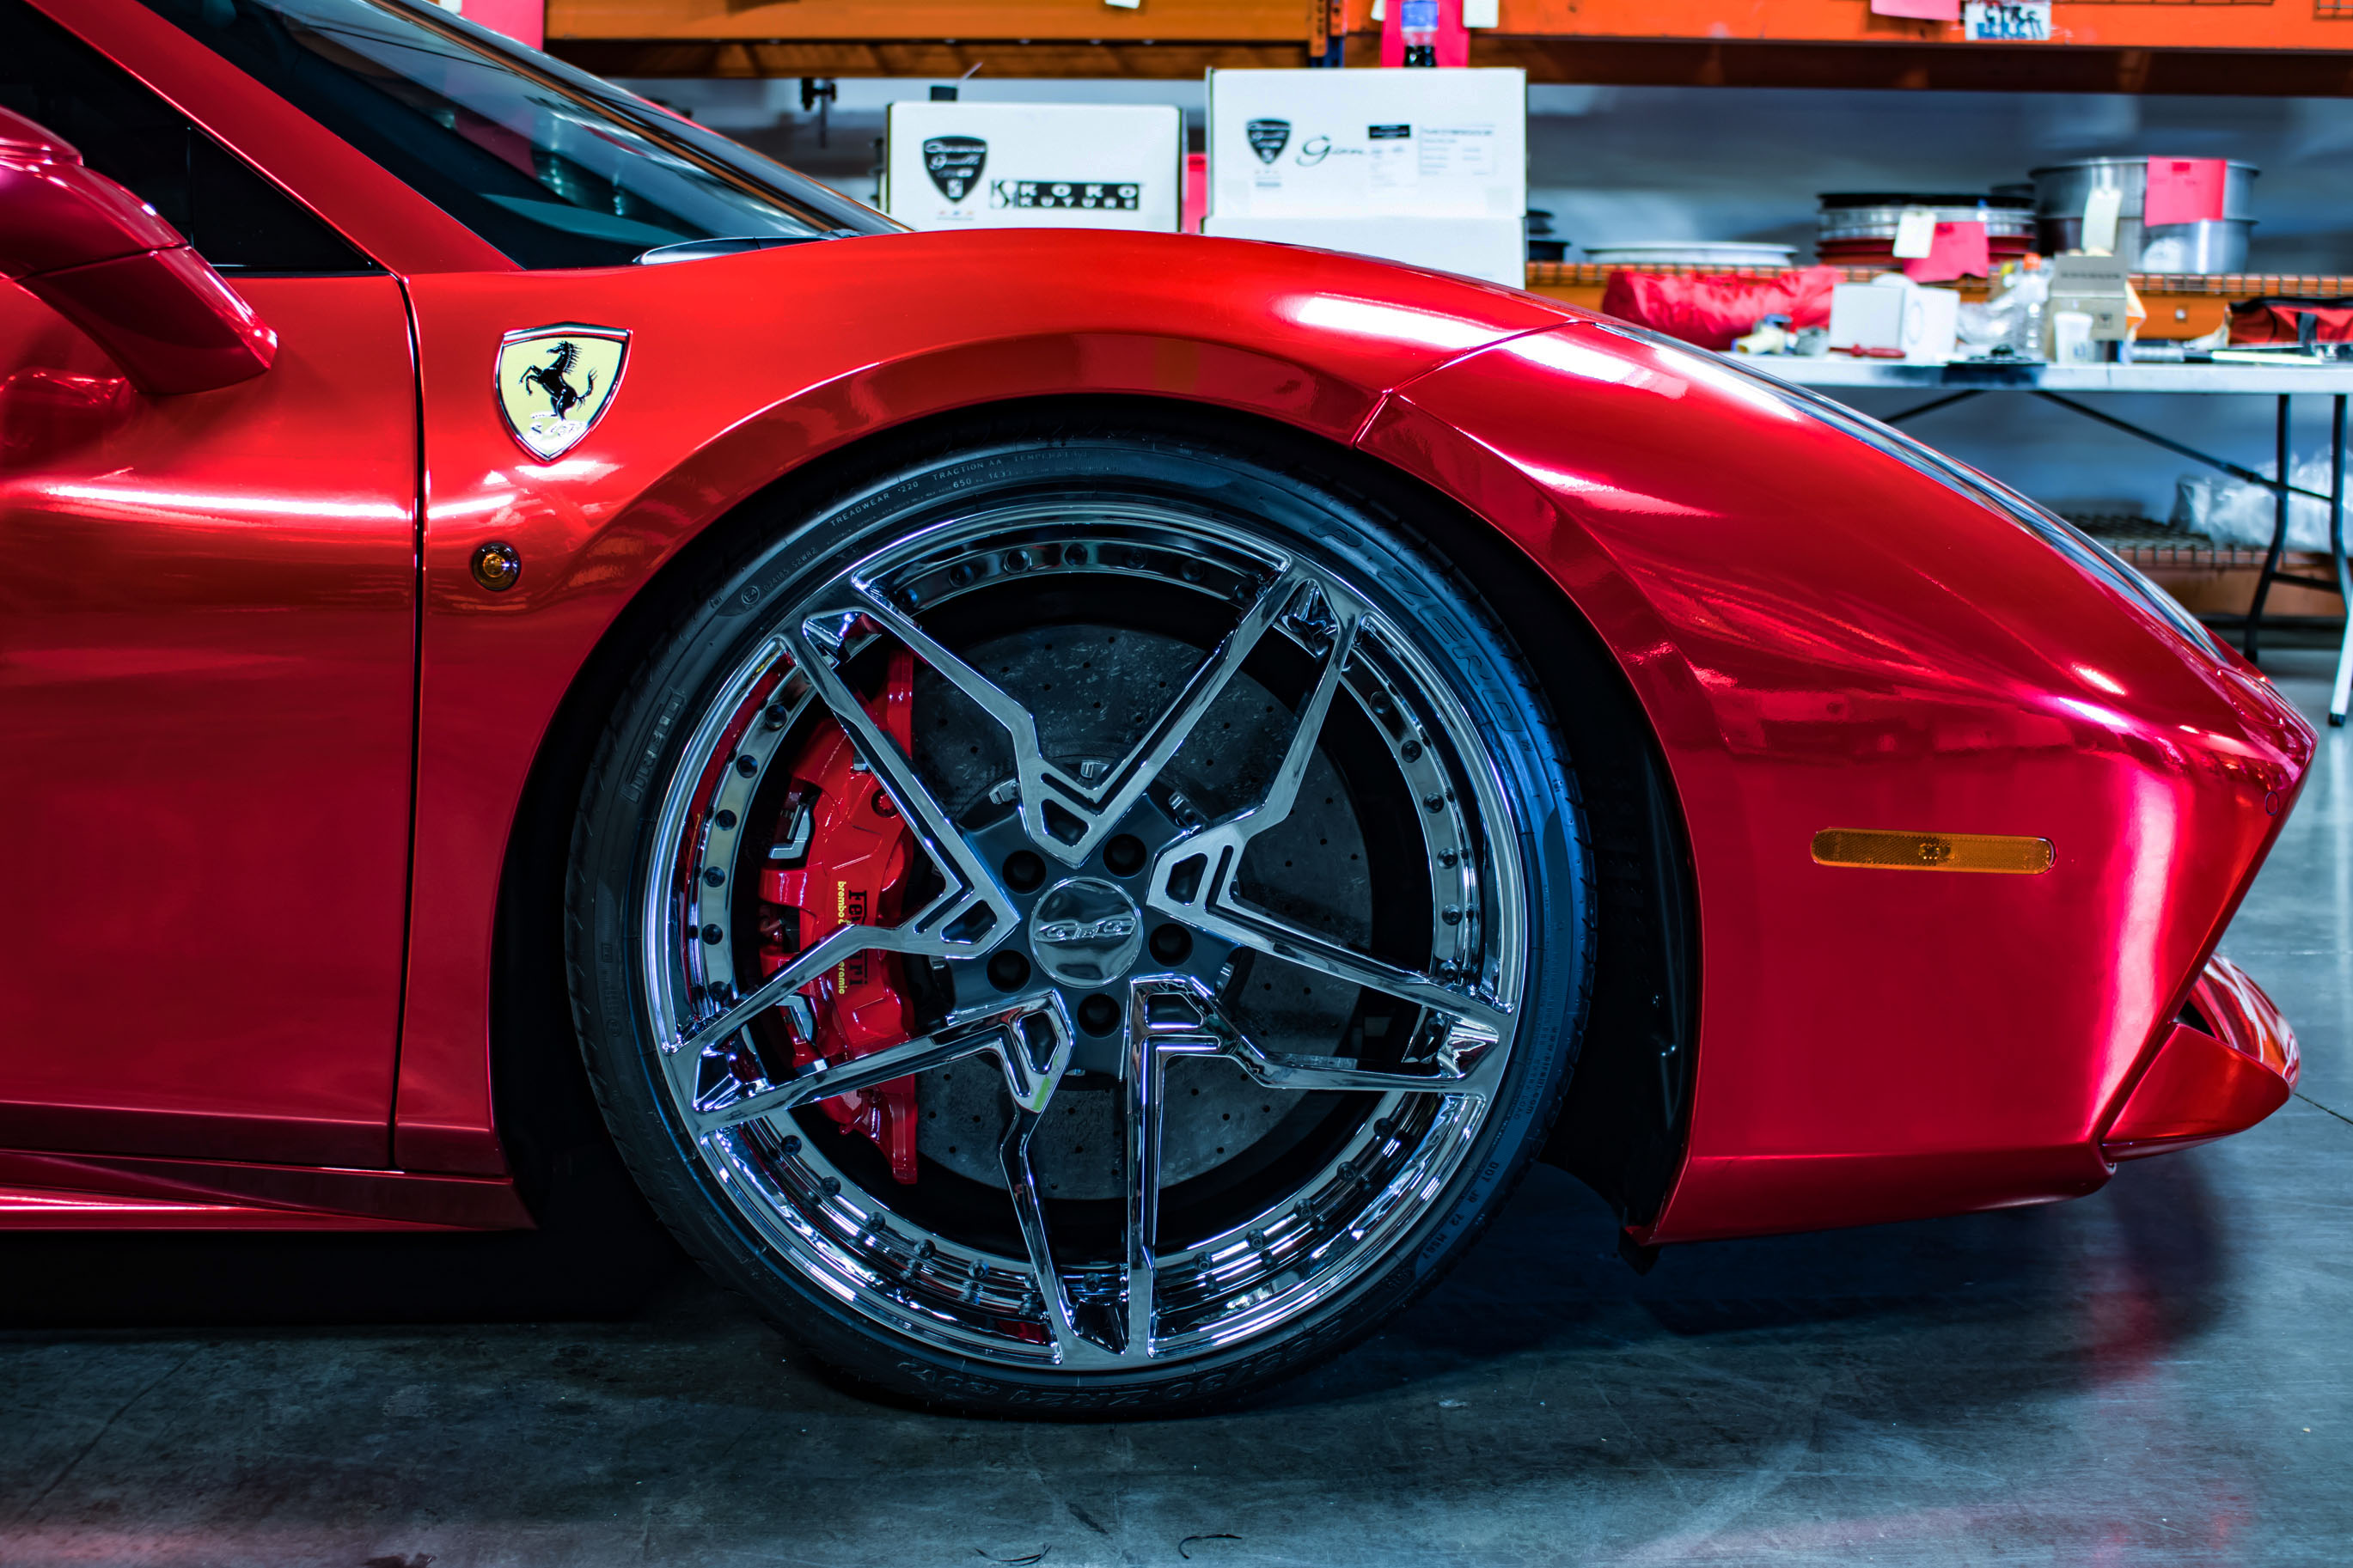 Custom Painted Rims for Ferrari – Giovanna Luxury Wheels